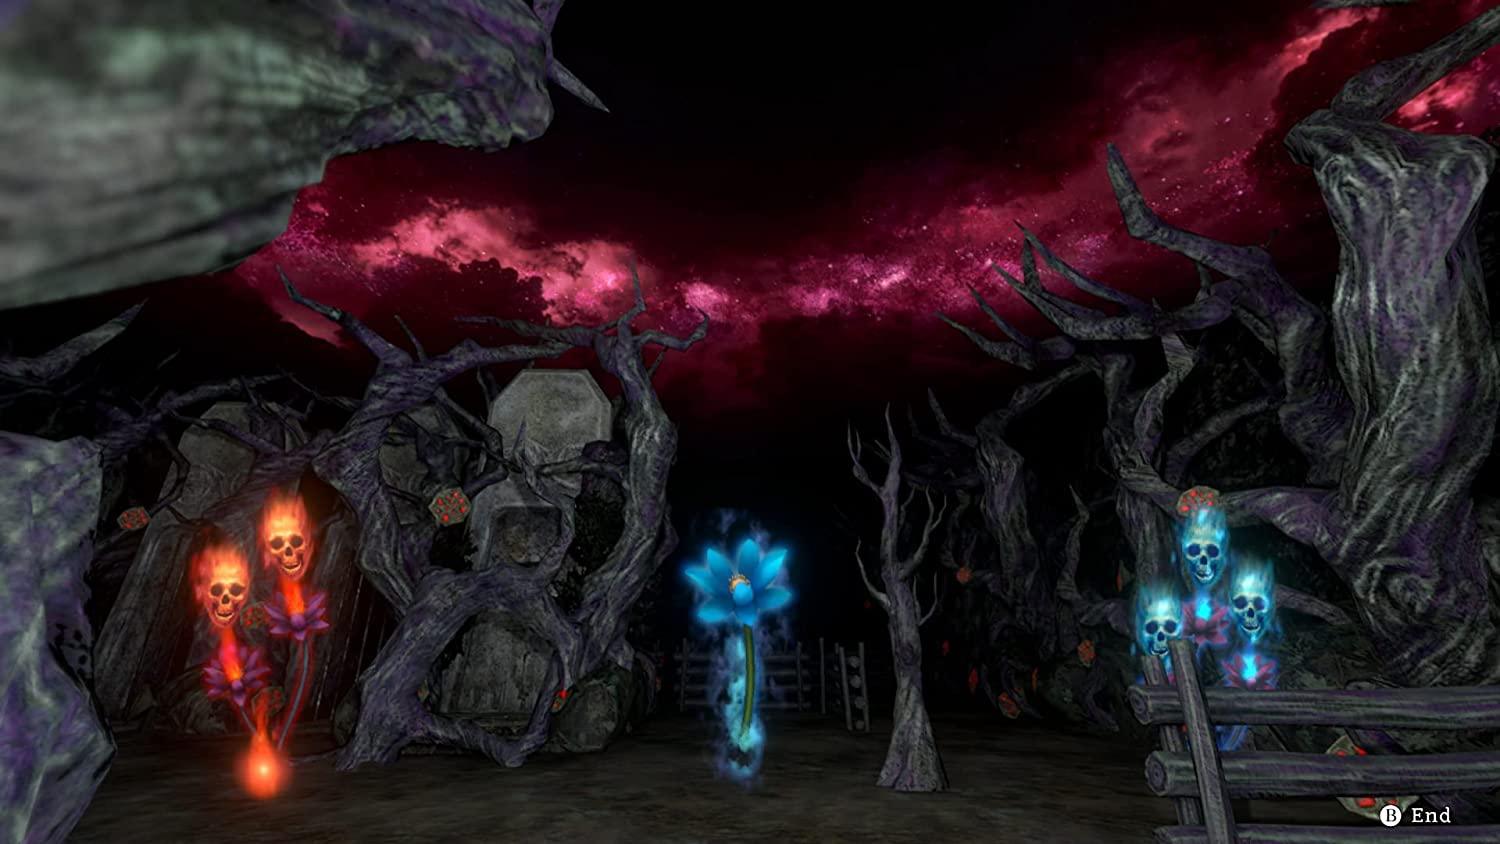 Undernauts: Labyrinth of Yomi (PS5) - GameStore.mt | Powered by Flutisat